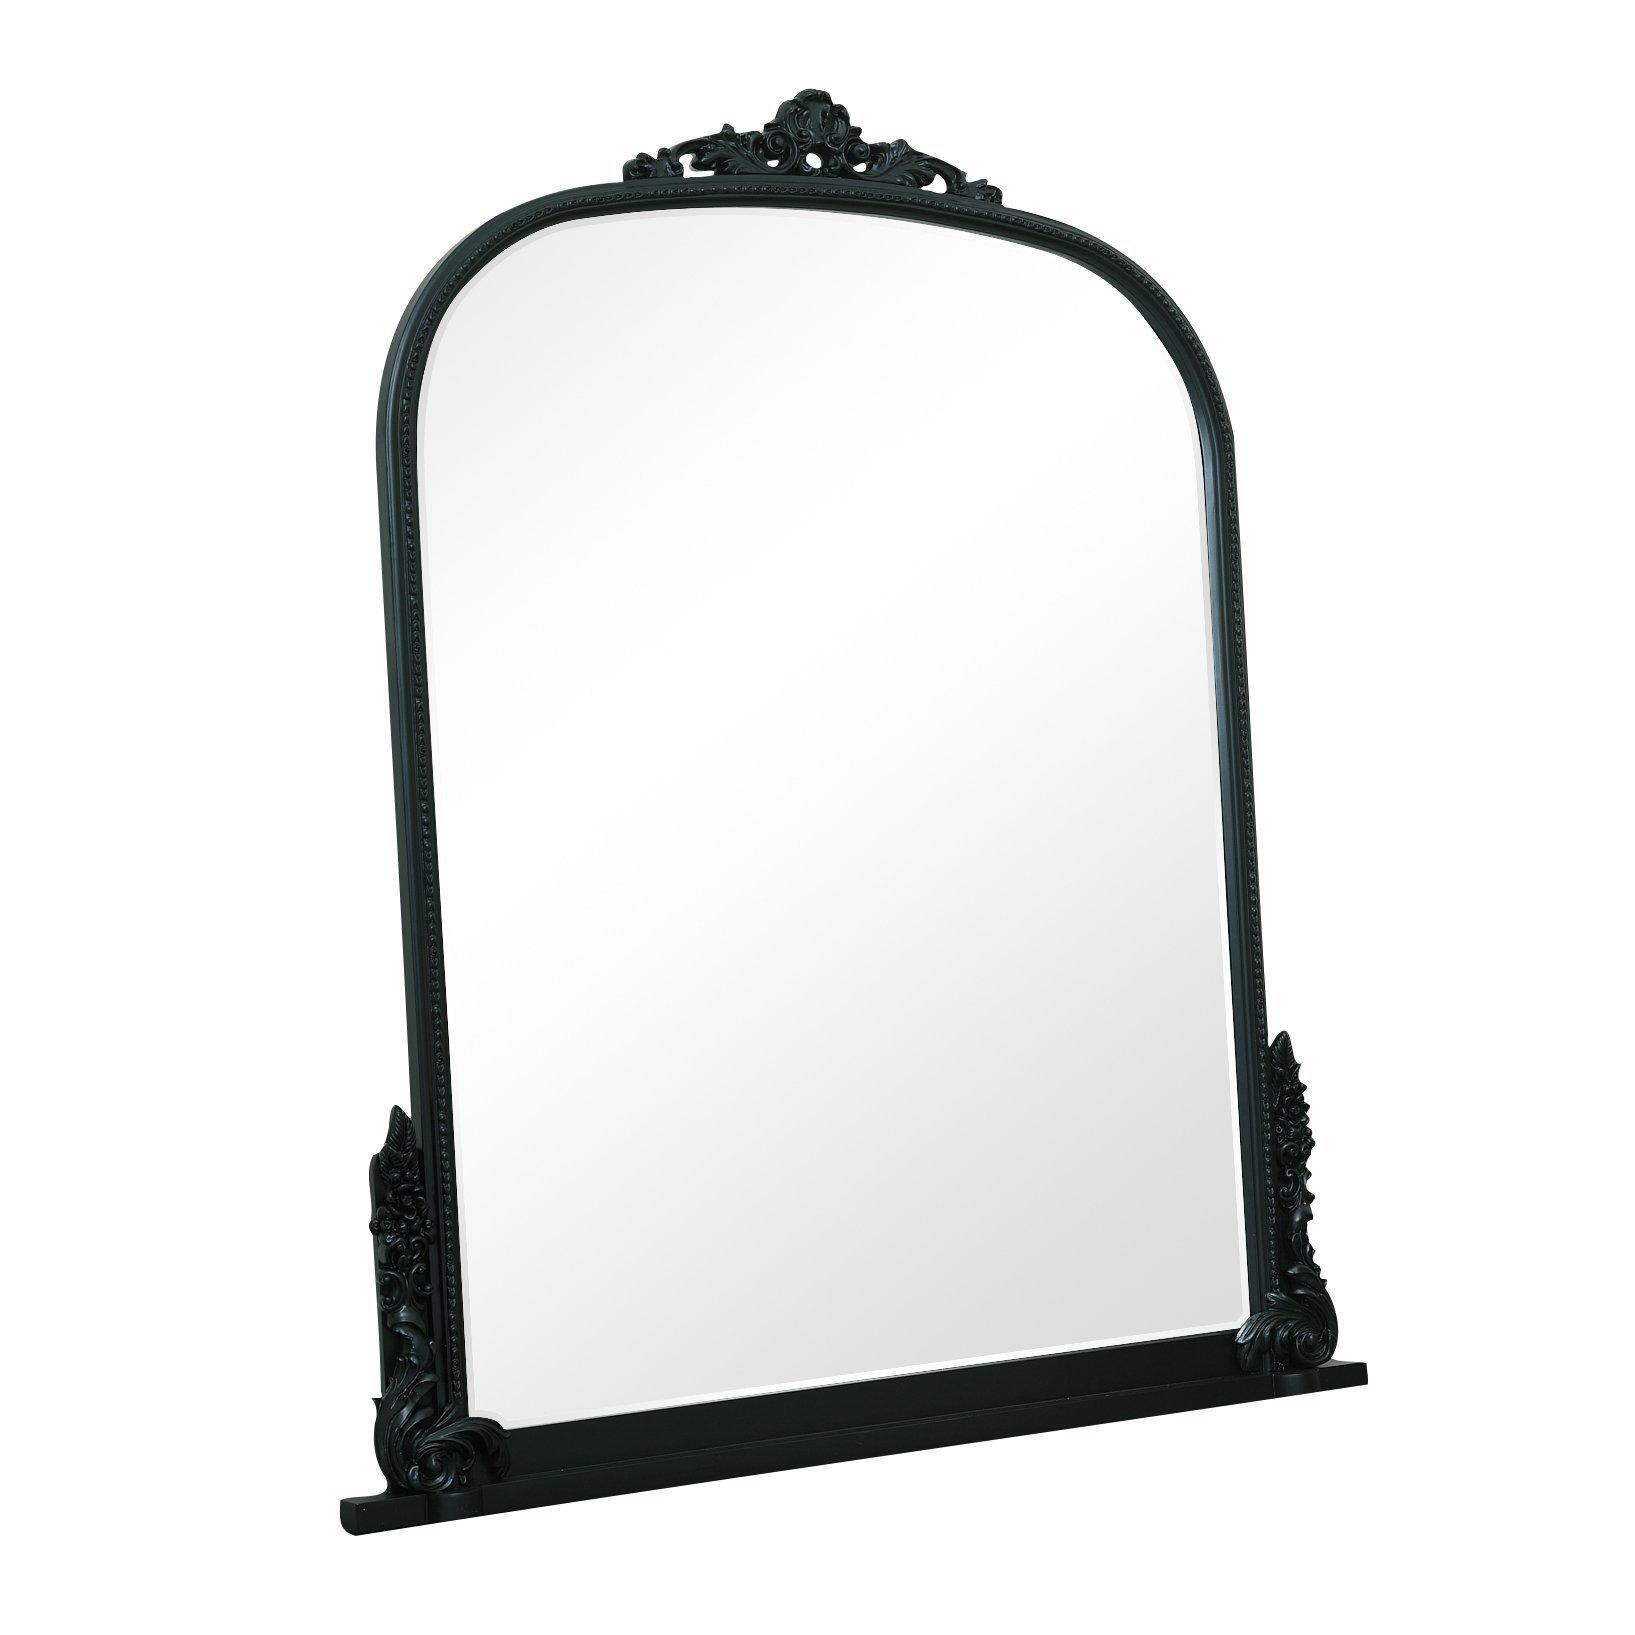 Large Arch Black Ornate Overmantle Mirror - 152cm X 128cm - image 1